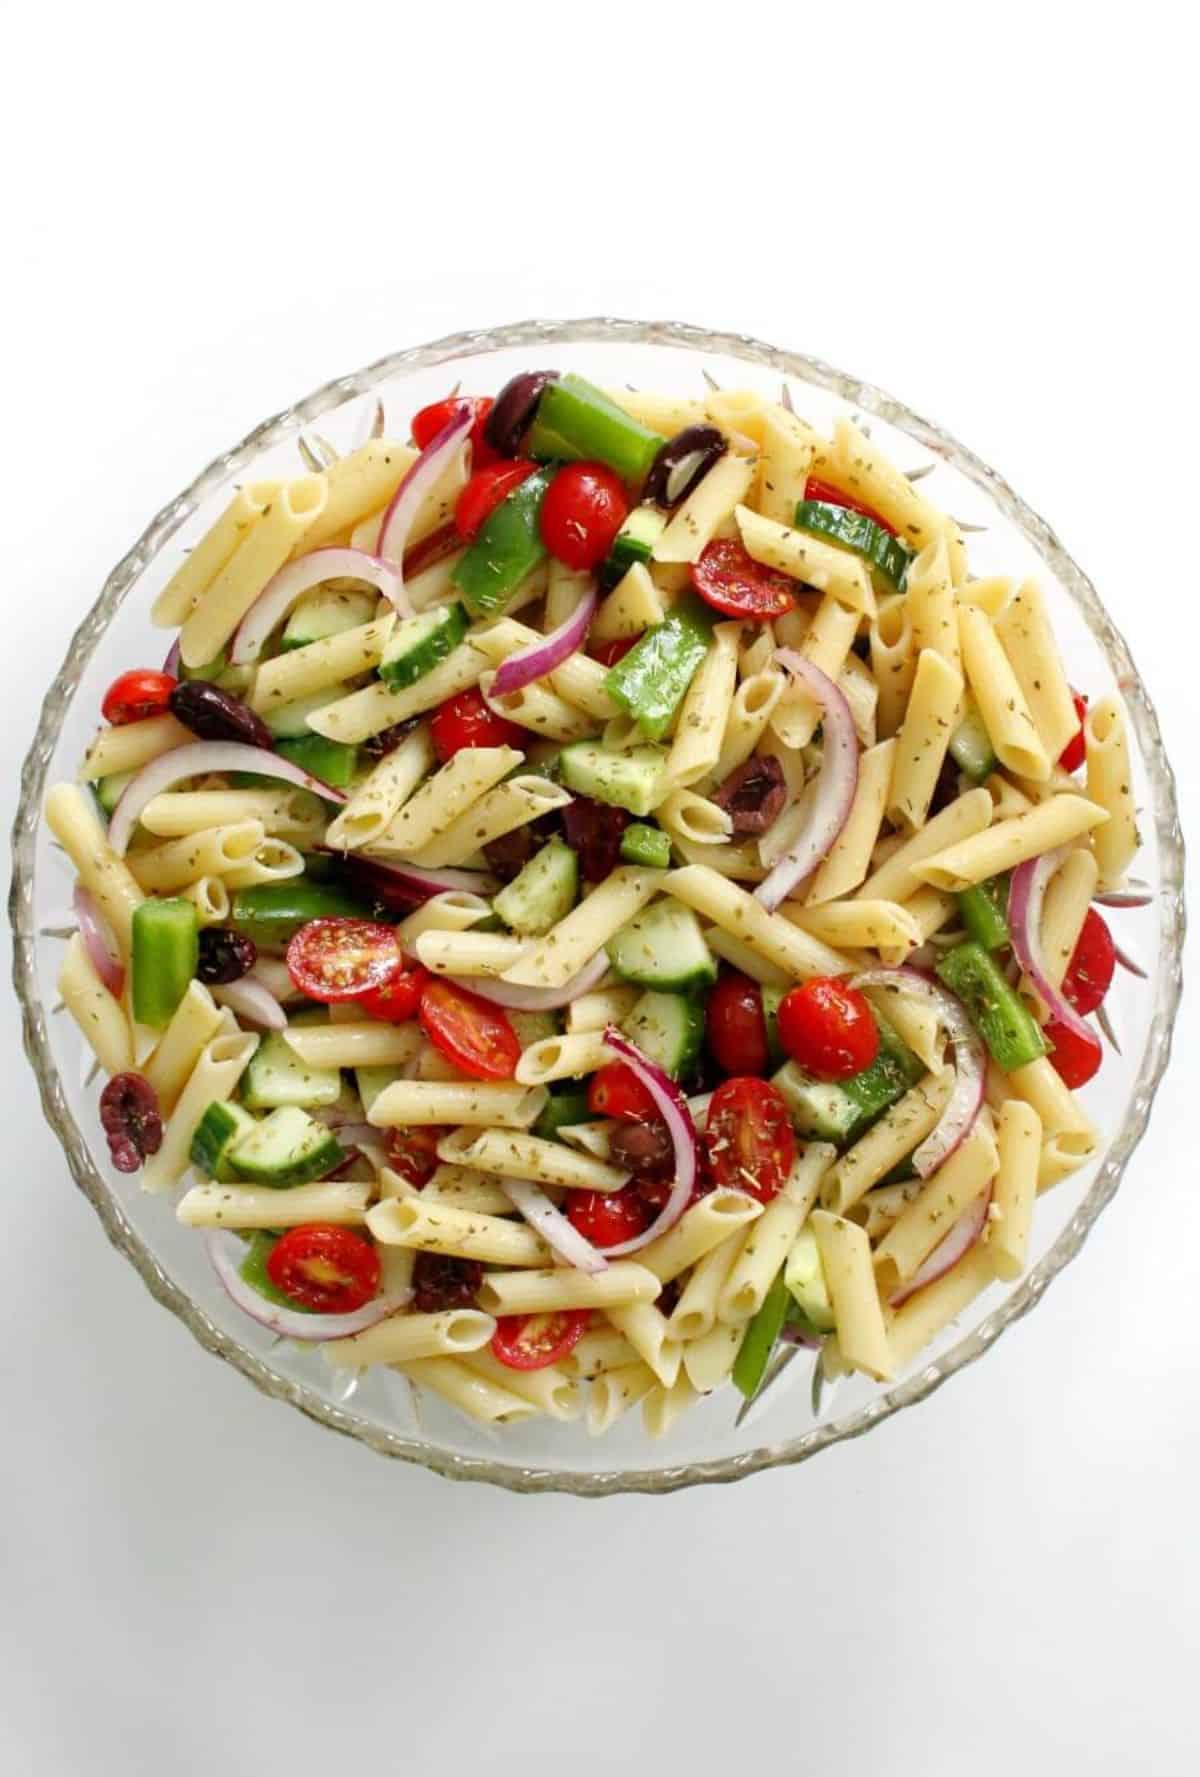 Healthy Gluten-Free Greek Pasta Salad in a glass bowl.